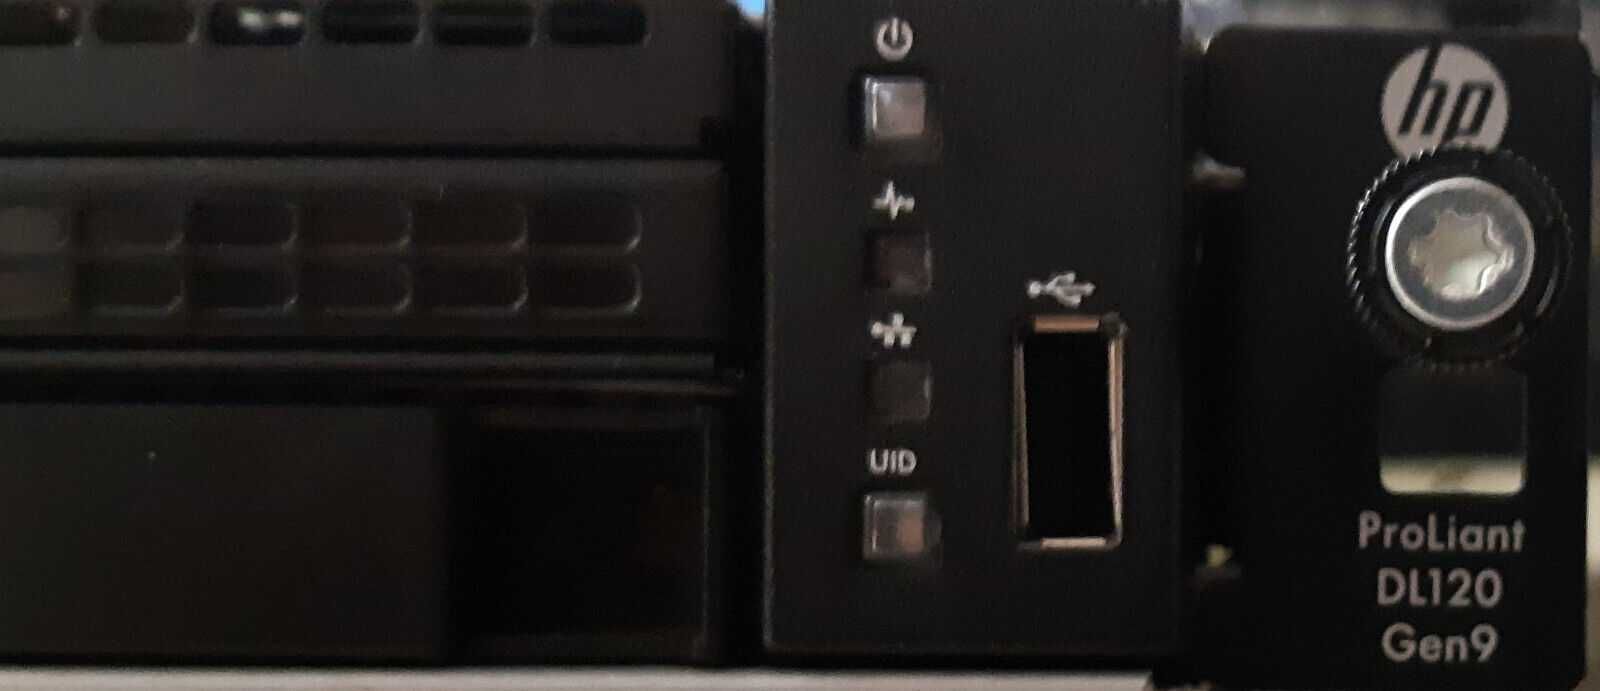 Server Rack HP ProLiant DL120 Gen9